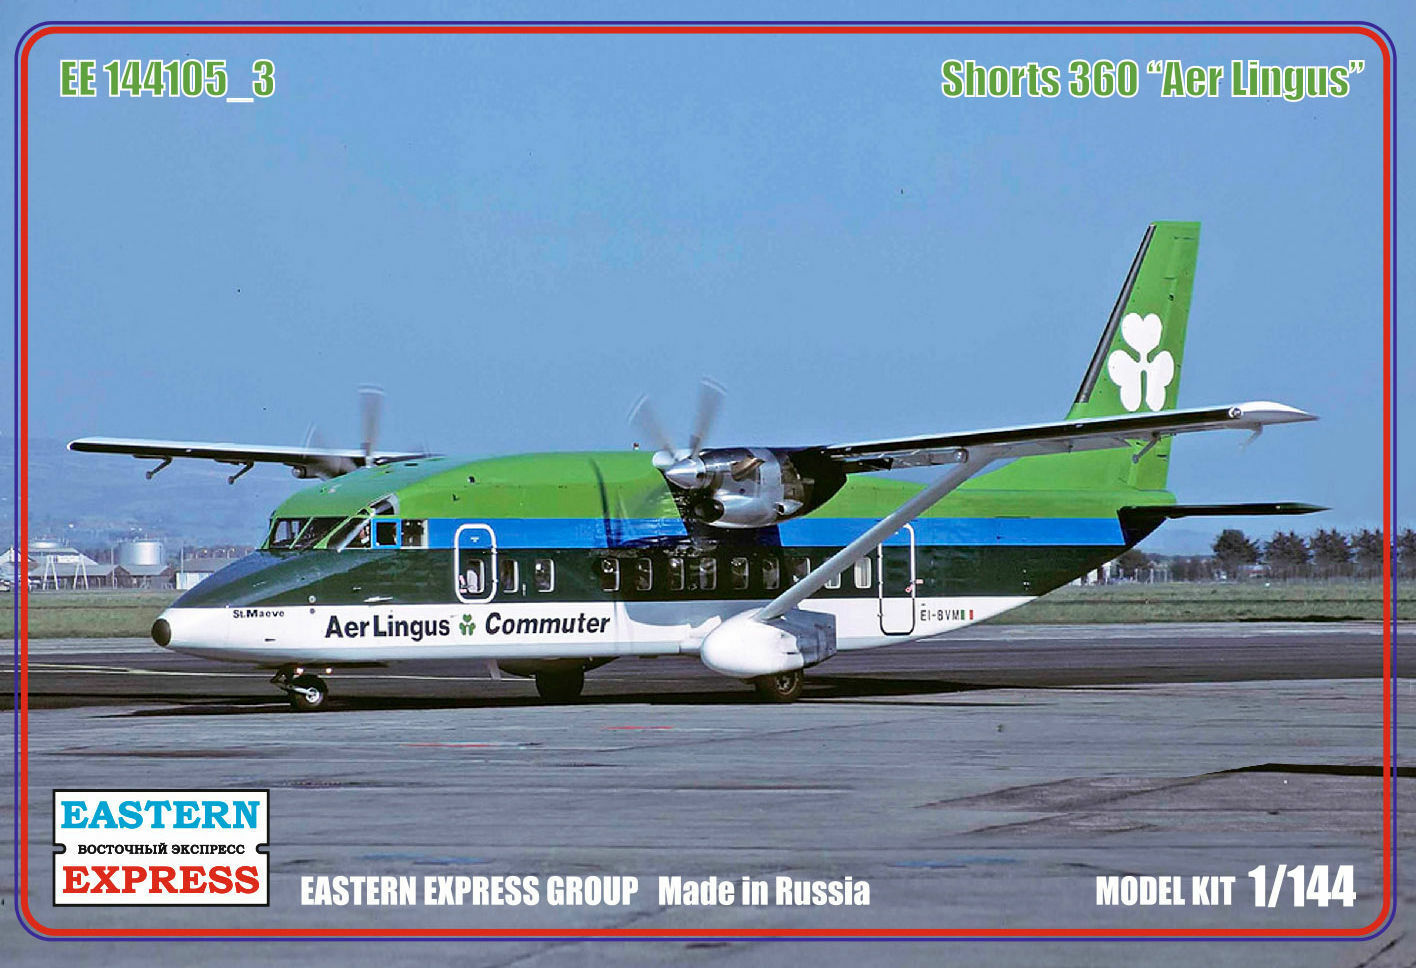 144105-3  авиация  Short-360 Aer Lingus (1:144)